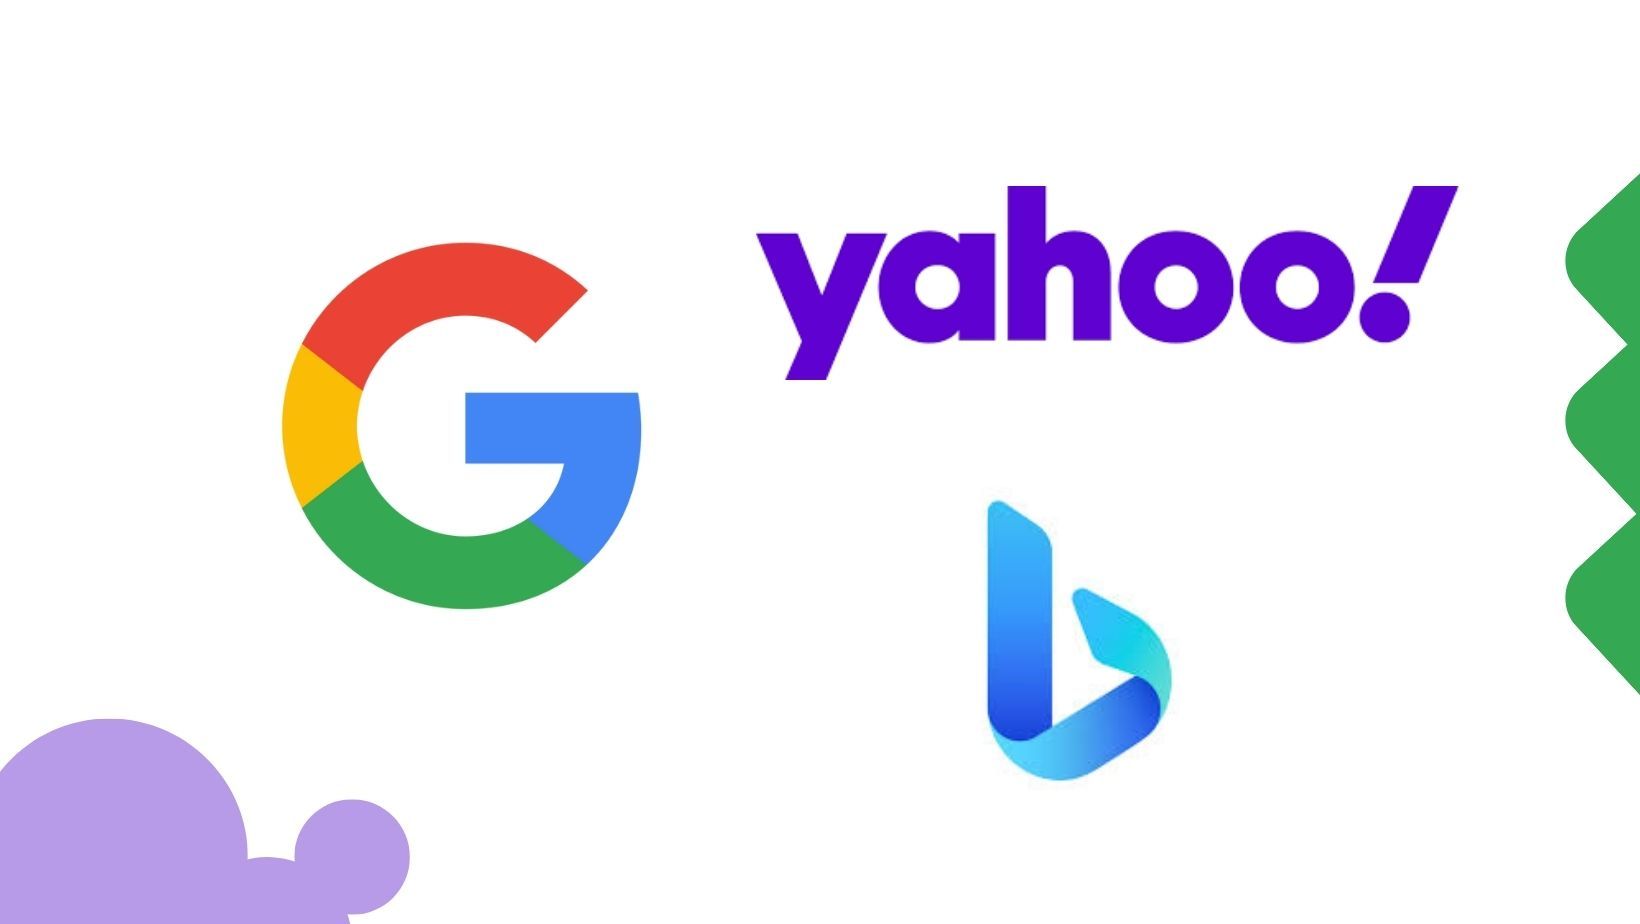 Google, Yahoo ang Bing's logos on white background